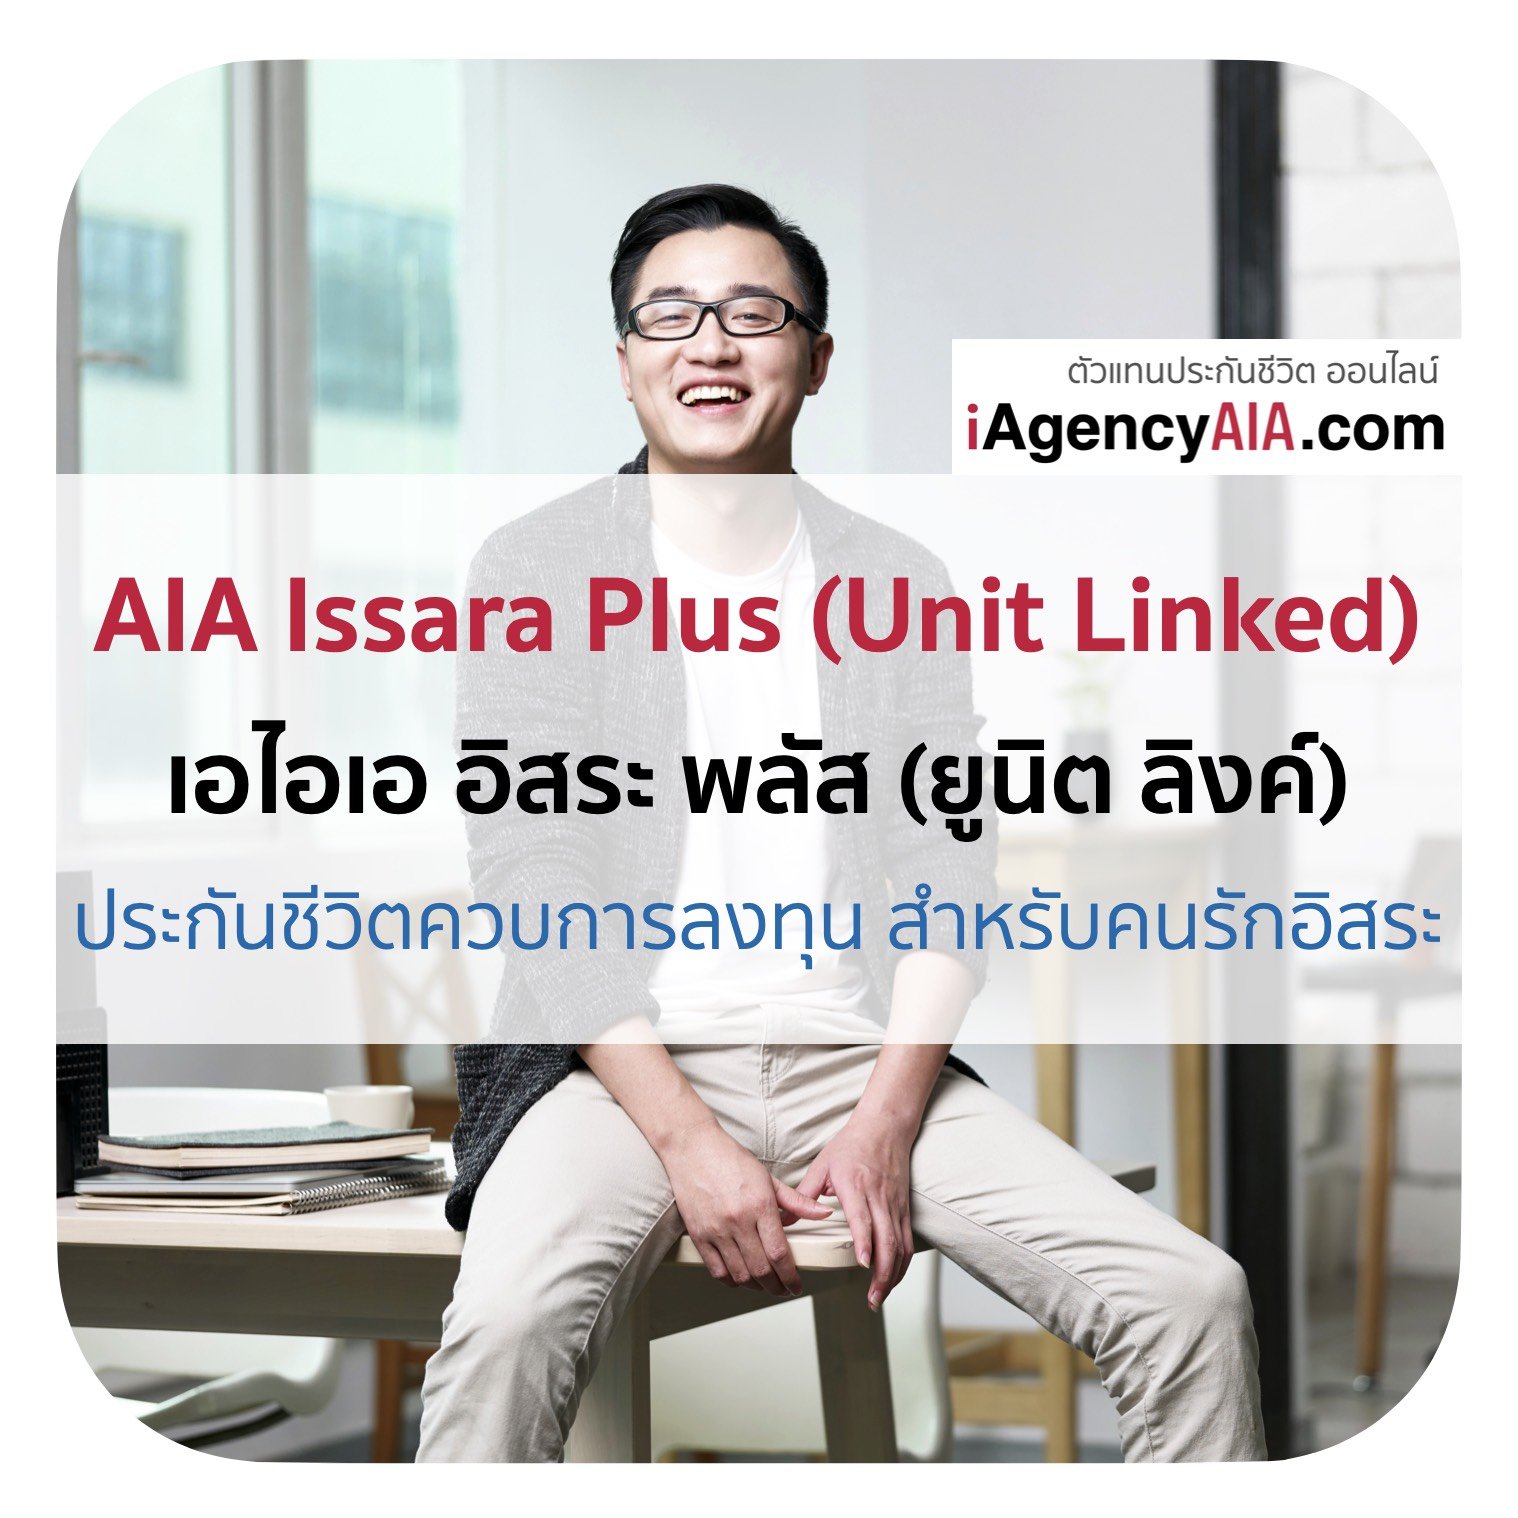 AIA Issara Plus (Unit Linked)